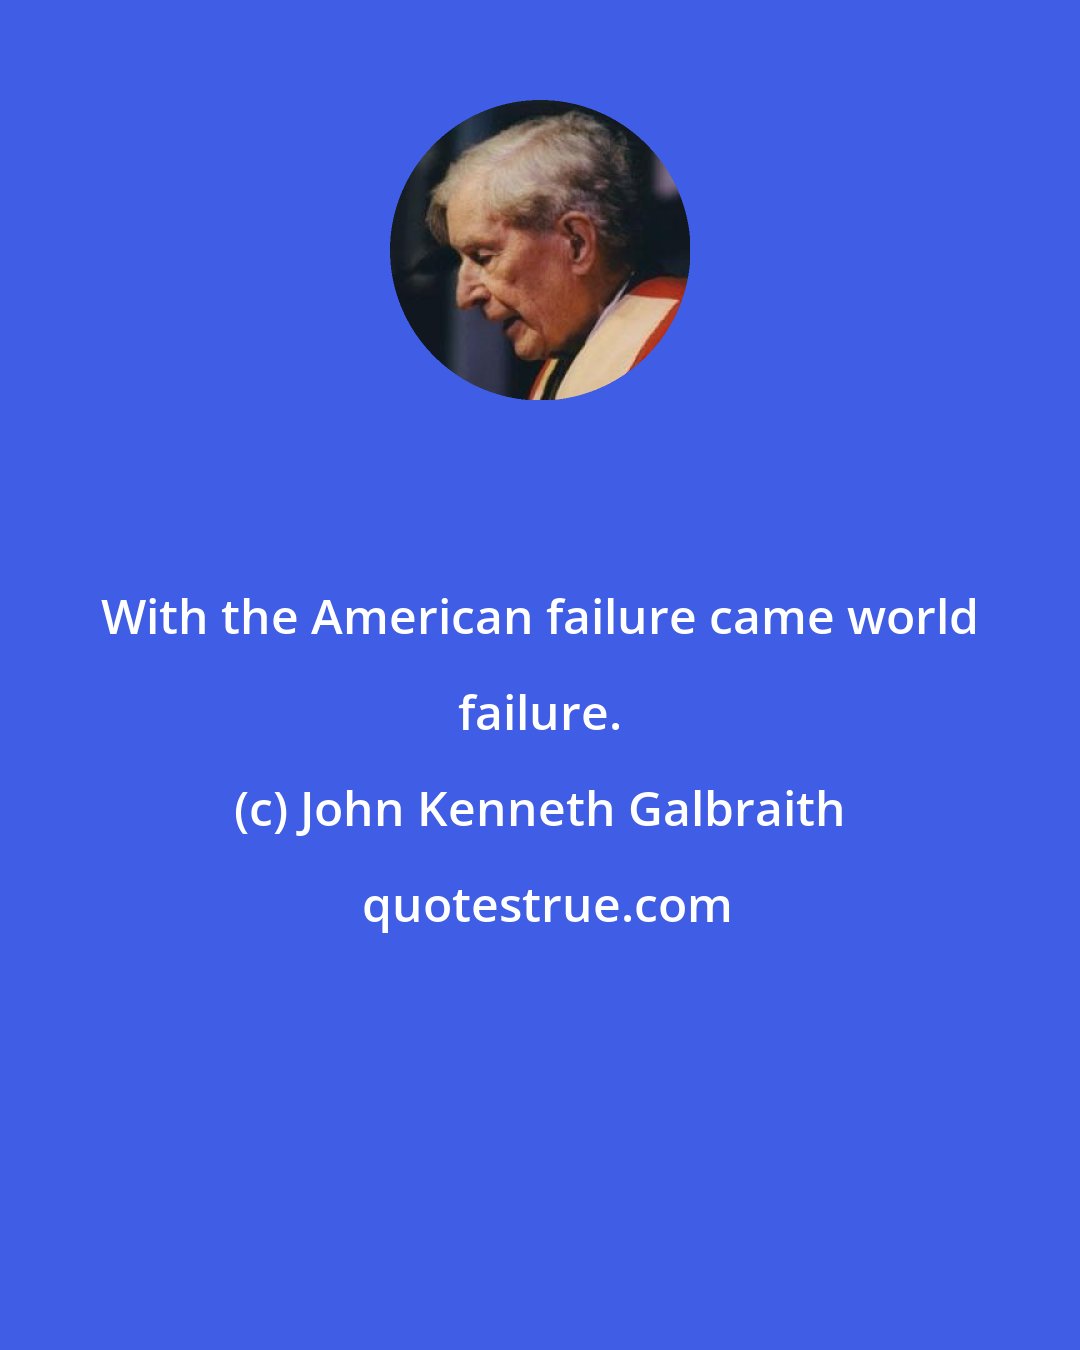 John Kenneth Galbraith: With the American failure came world failure.